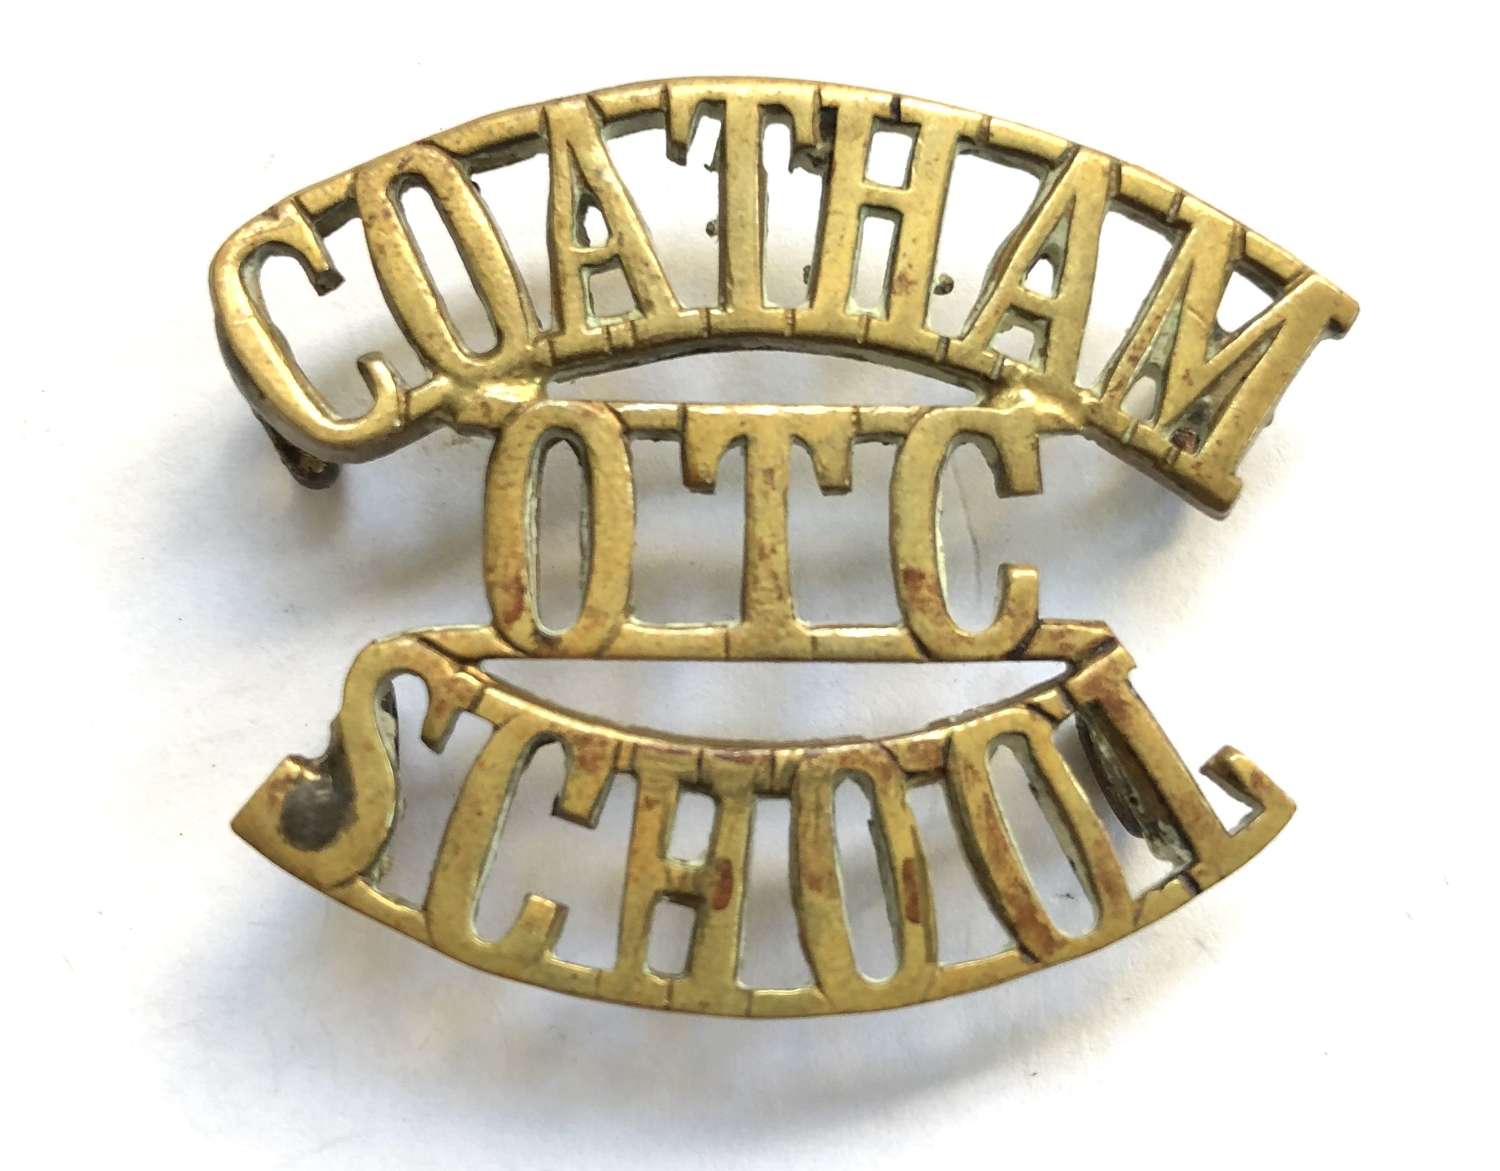 COATHAM / OTC / SCHOOL scarce Kent brass shoulder title